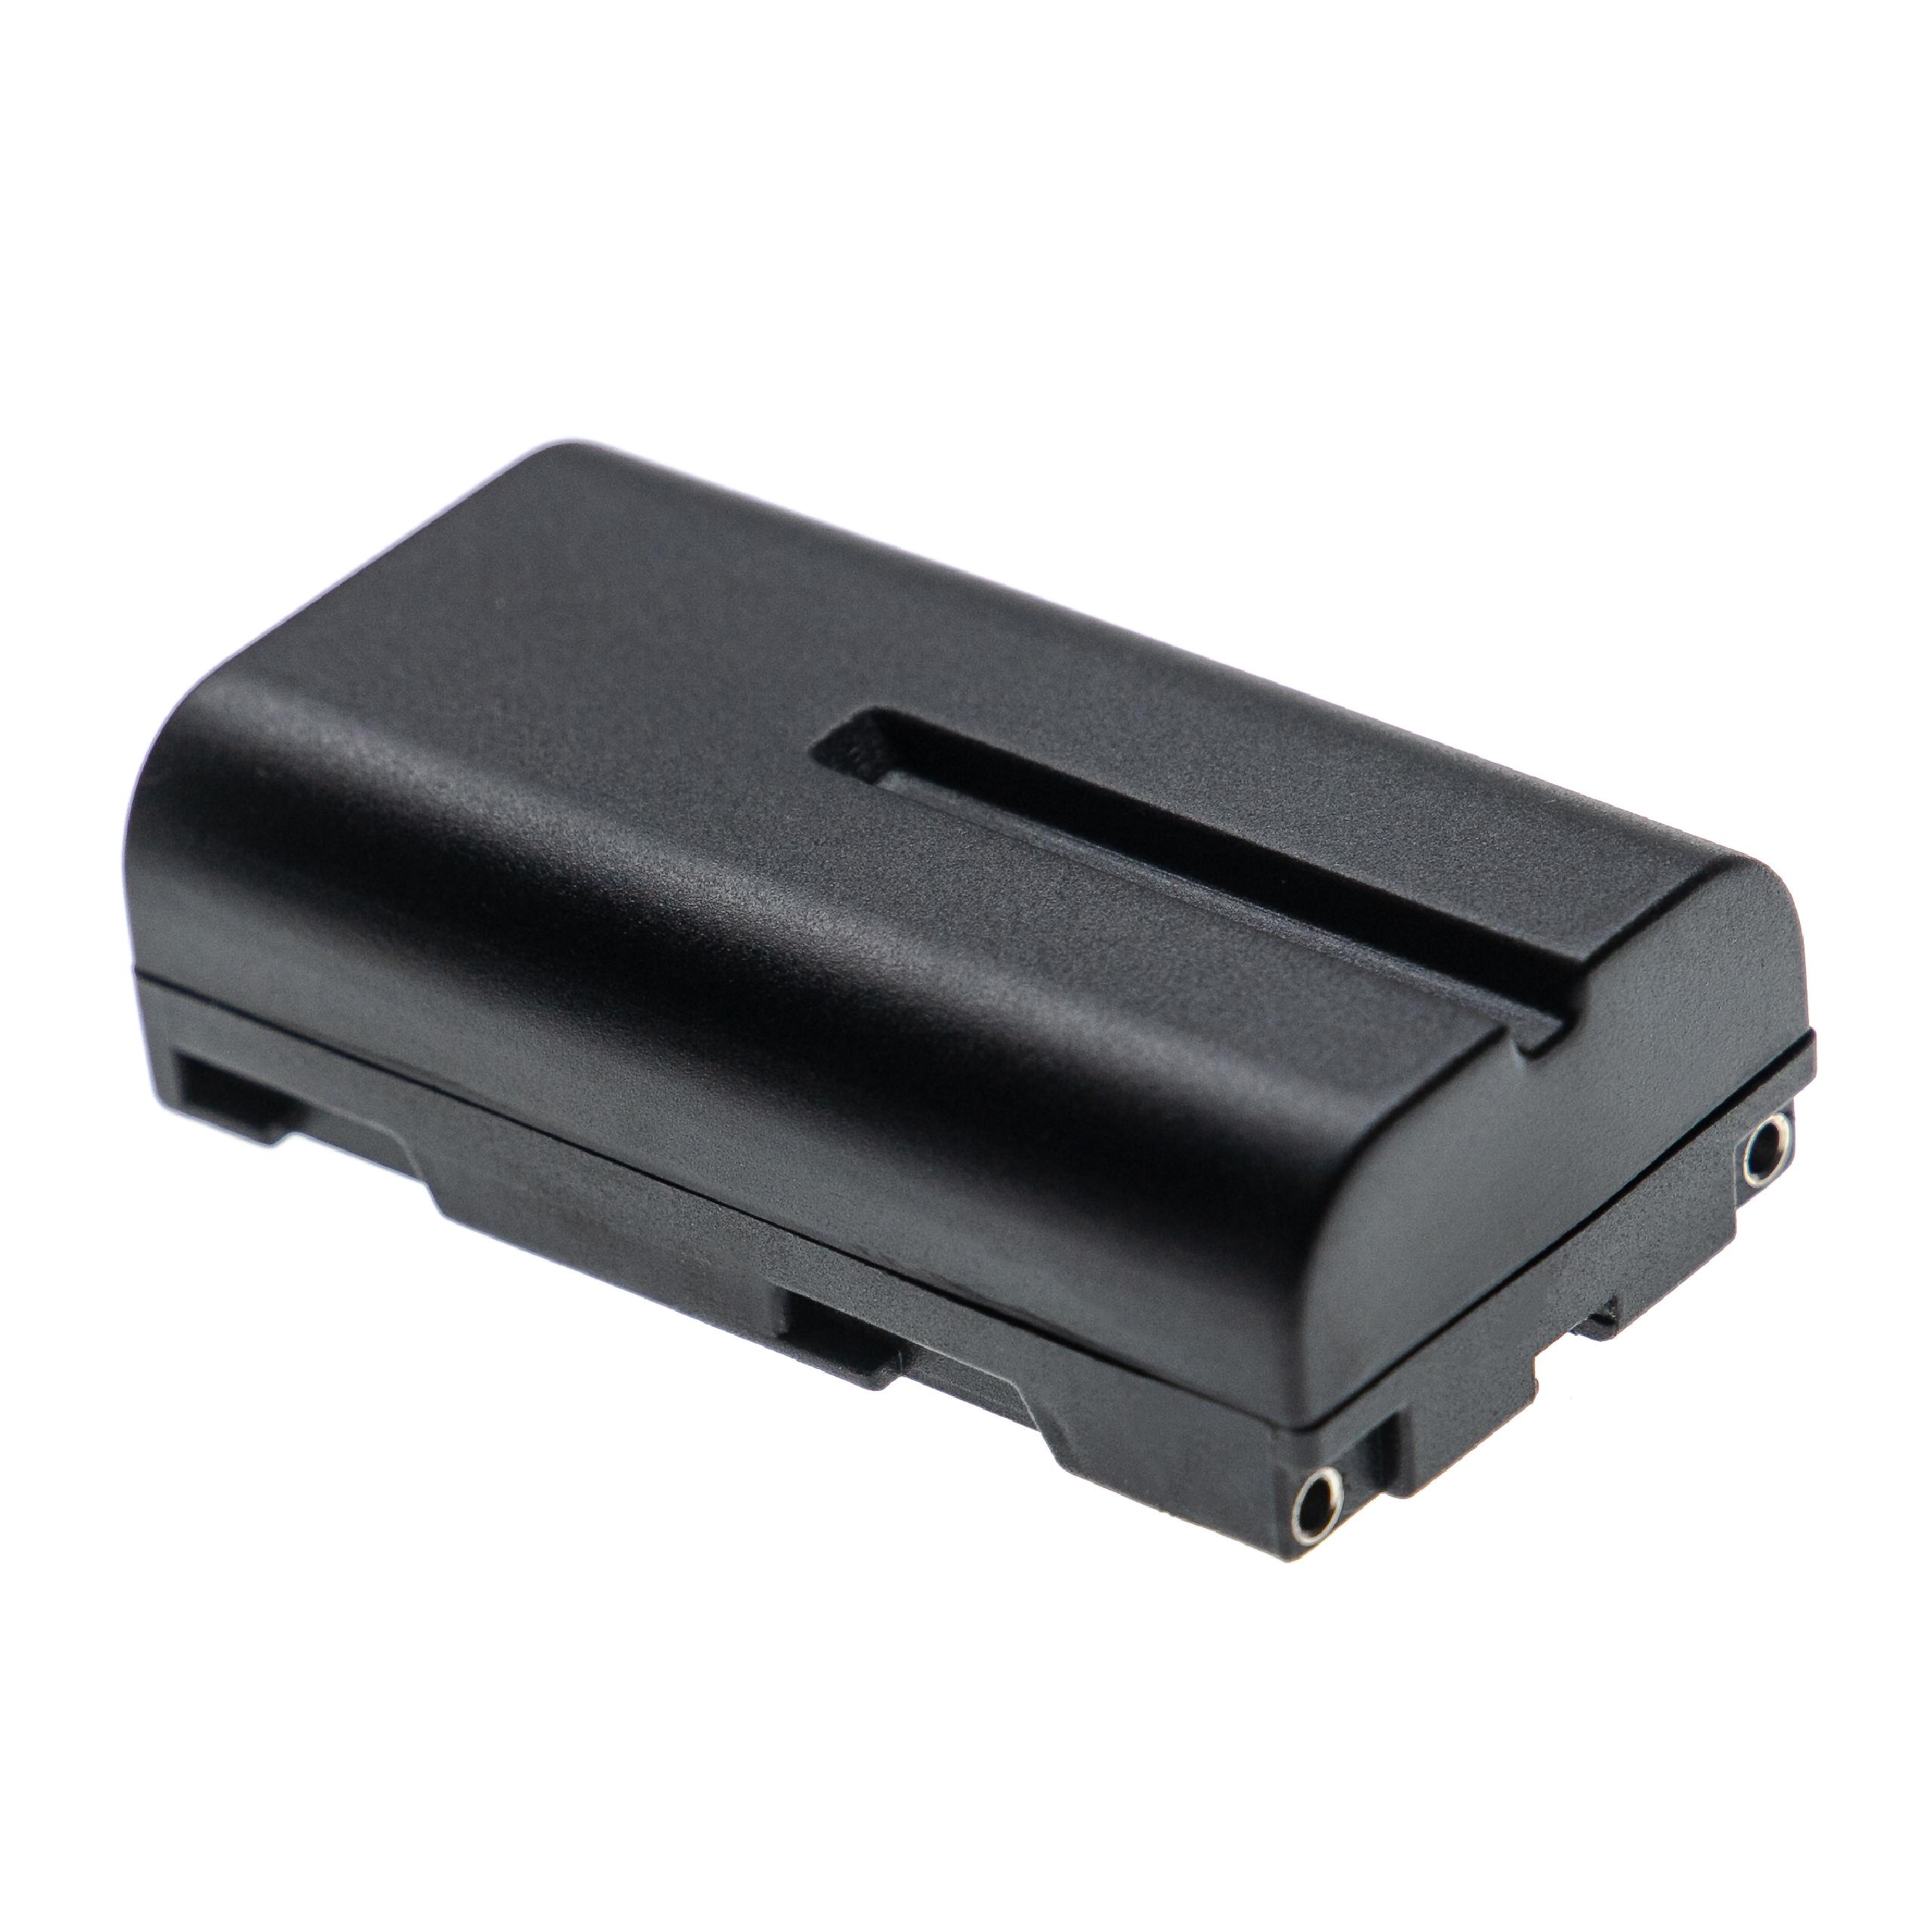 Printer Battery Replacement for Epson C32C831091, LIP-2500, NP-500, NP-500H - 2600mAh 7.4V Li-Ion